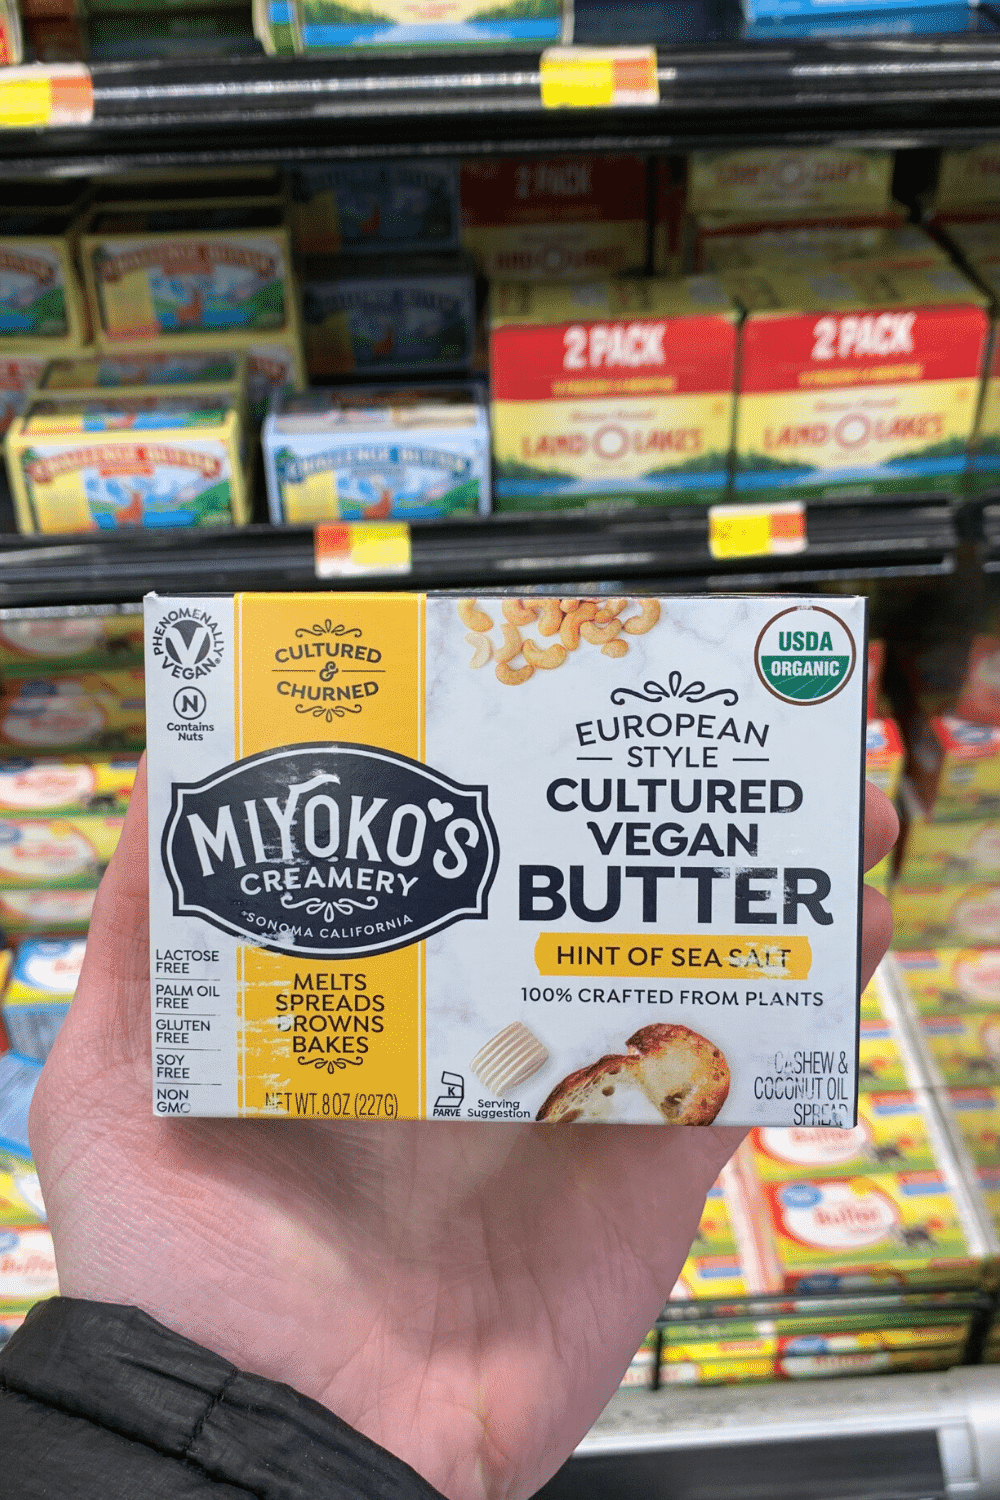 A hand holding Miyoko's creamery cultured vegan butter.